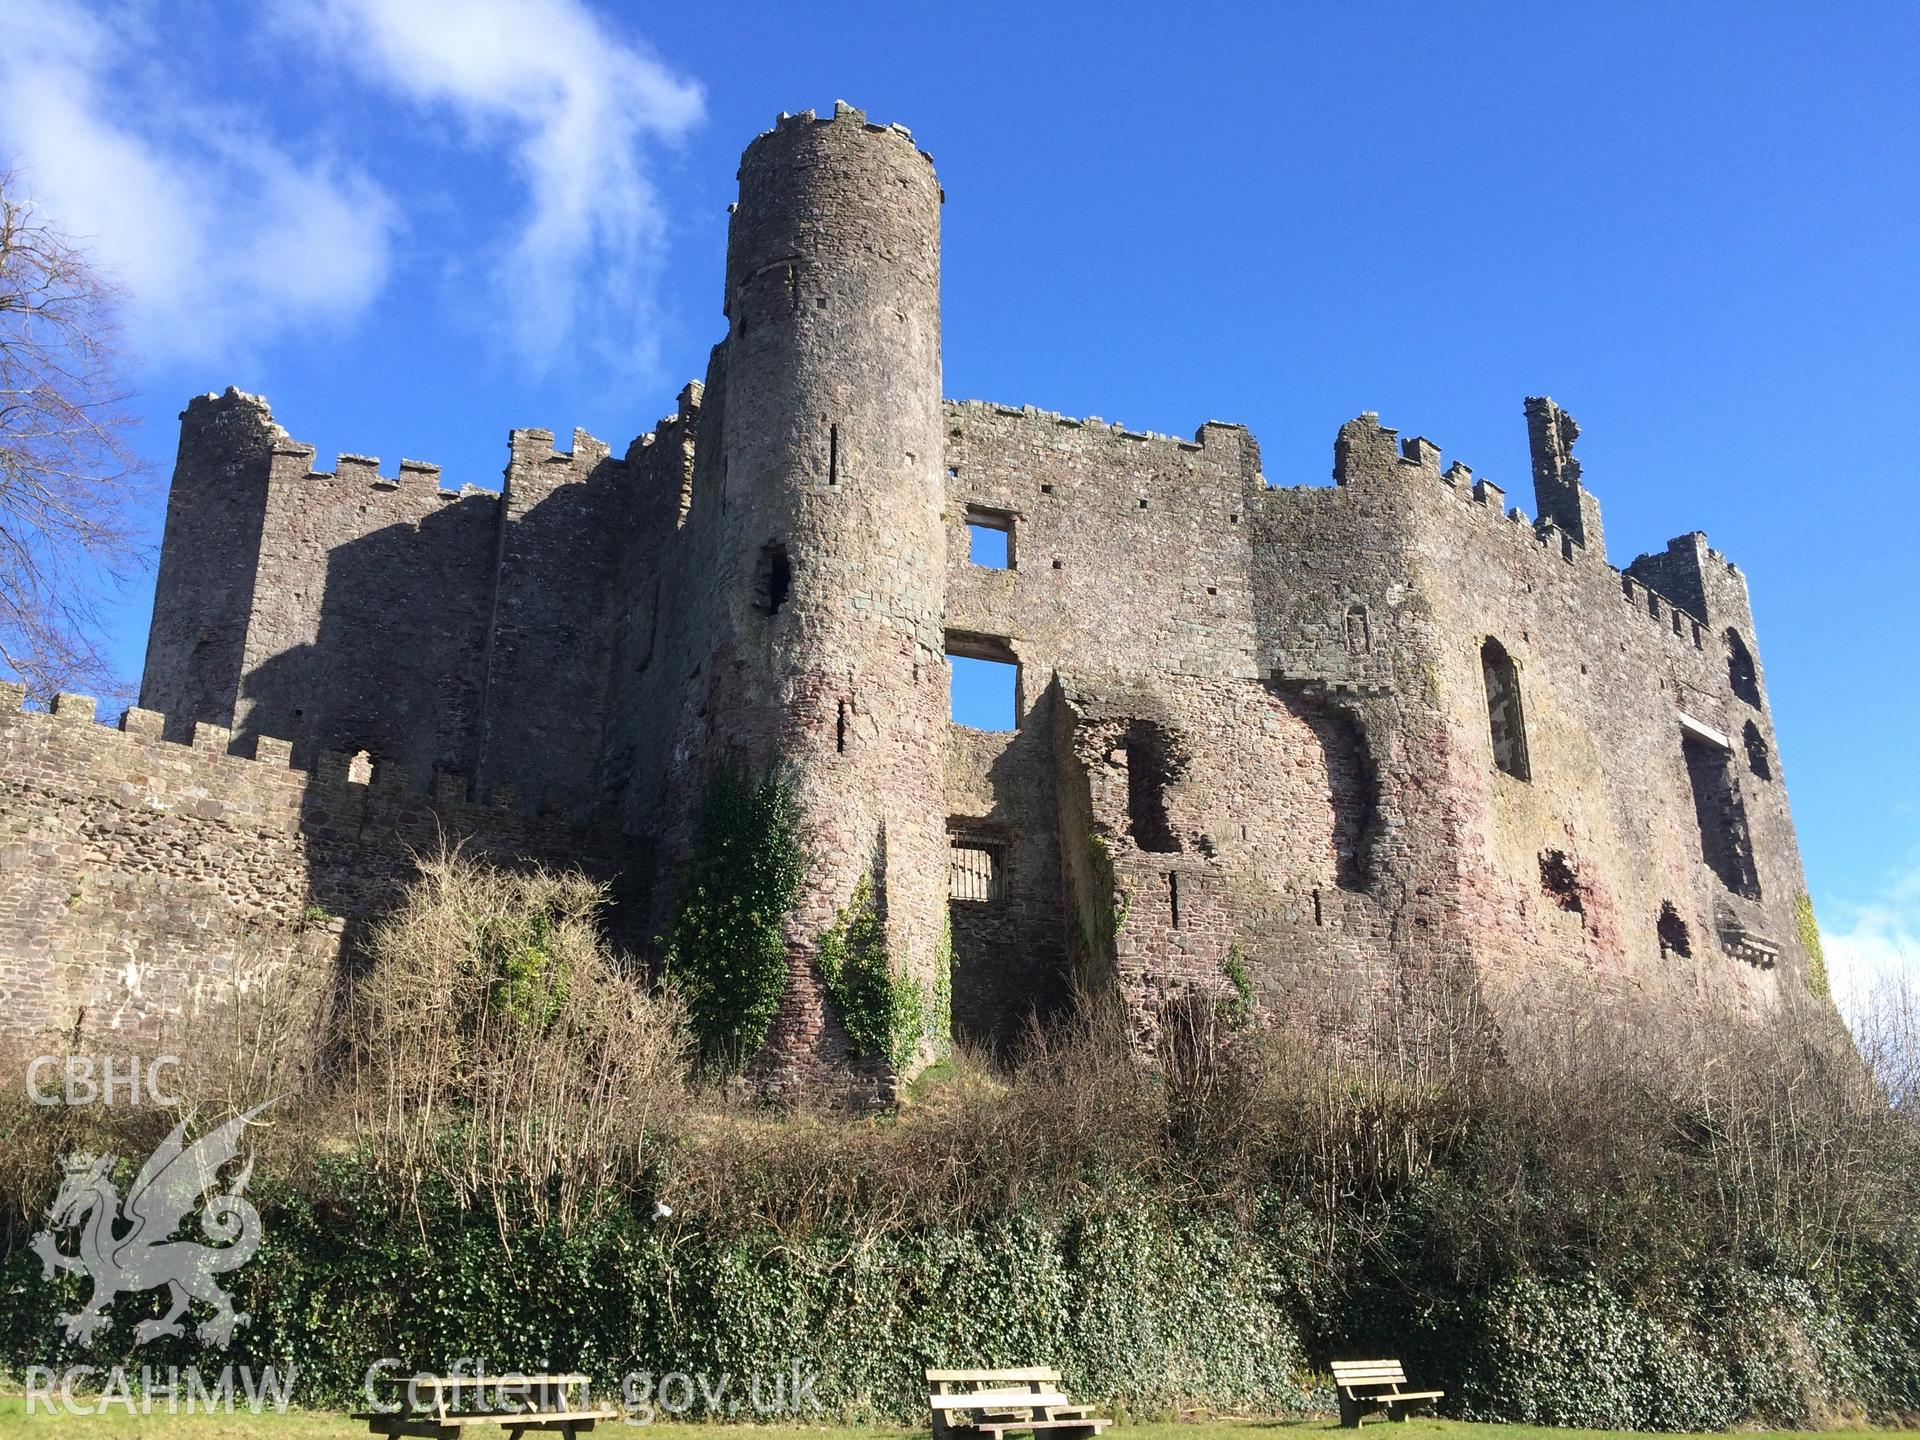 Colour photo showing Laugharne Castle, produced by Paul R. Davis,  10th March 2016.